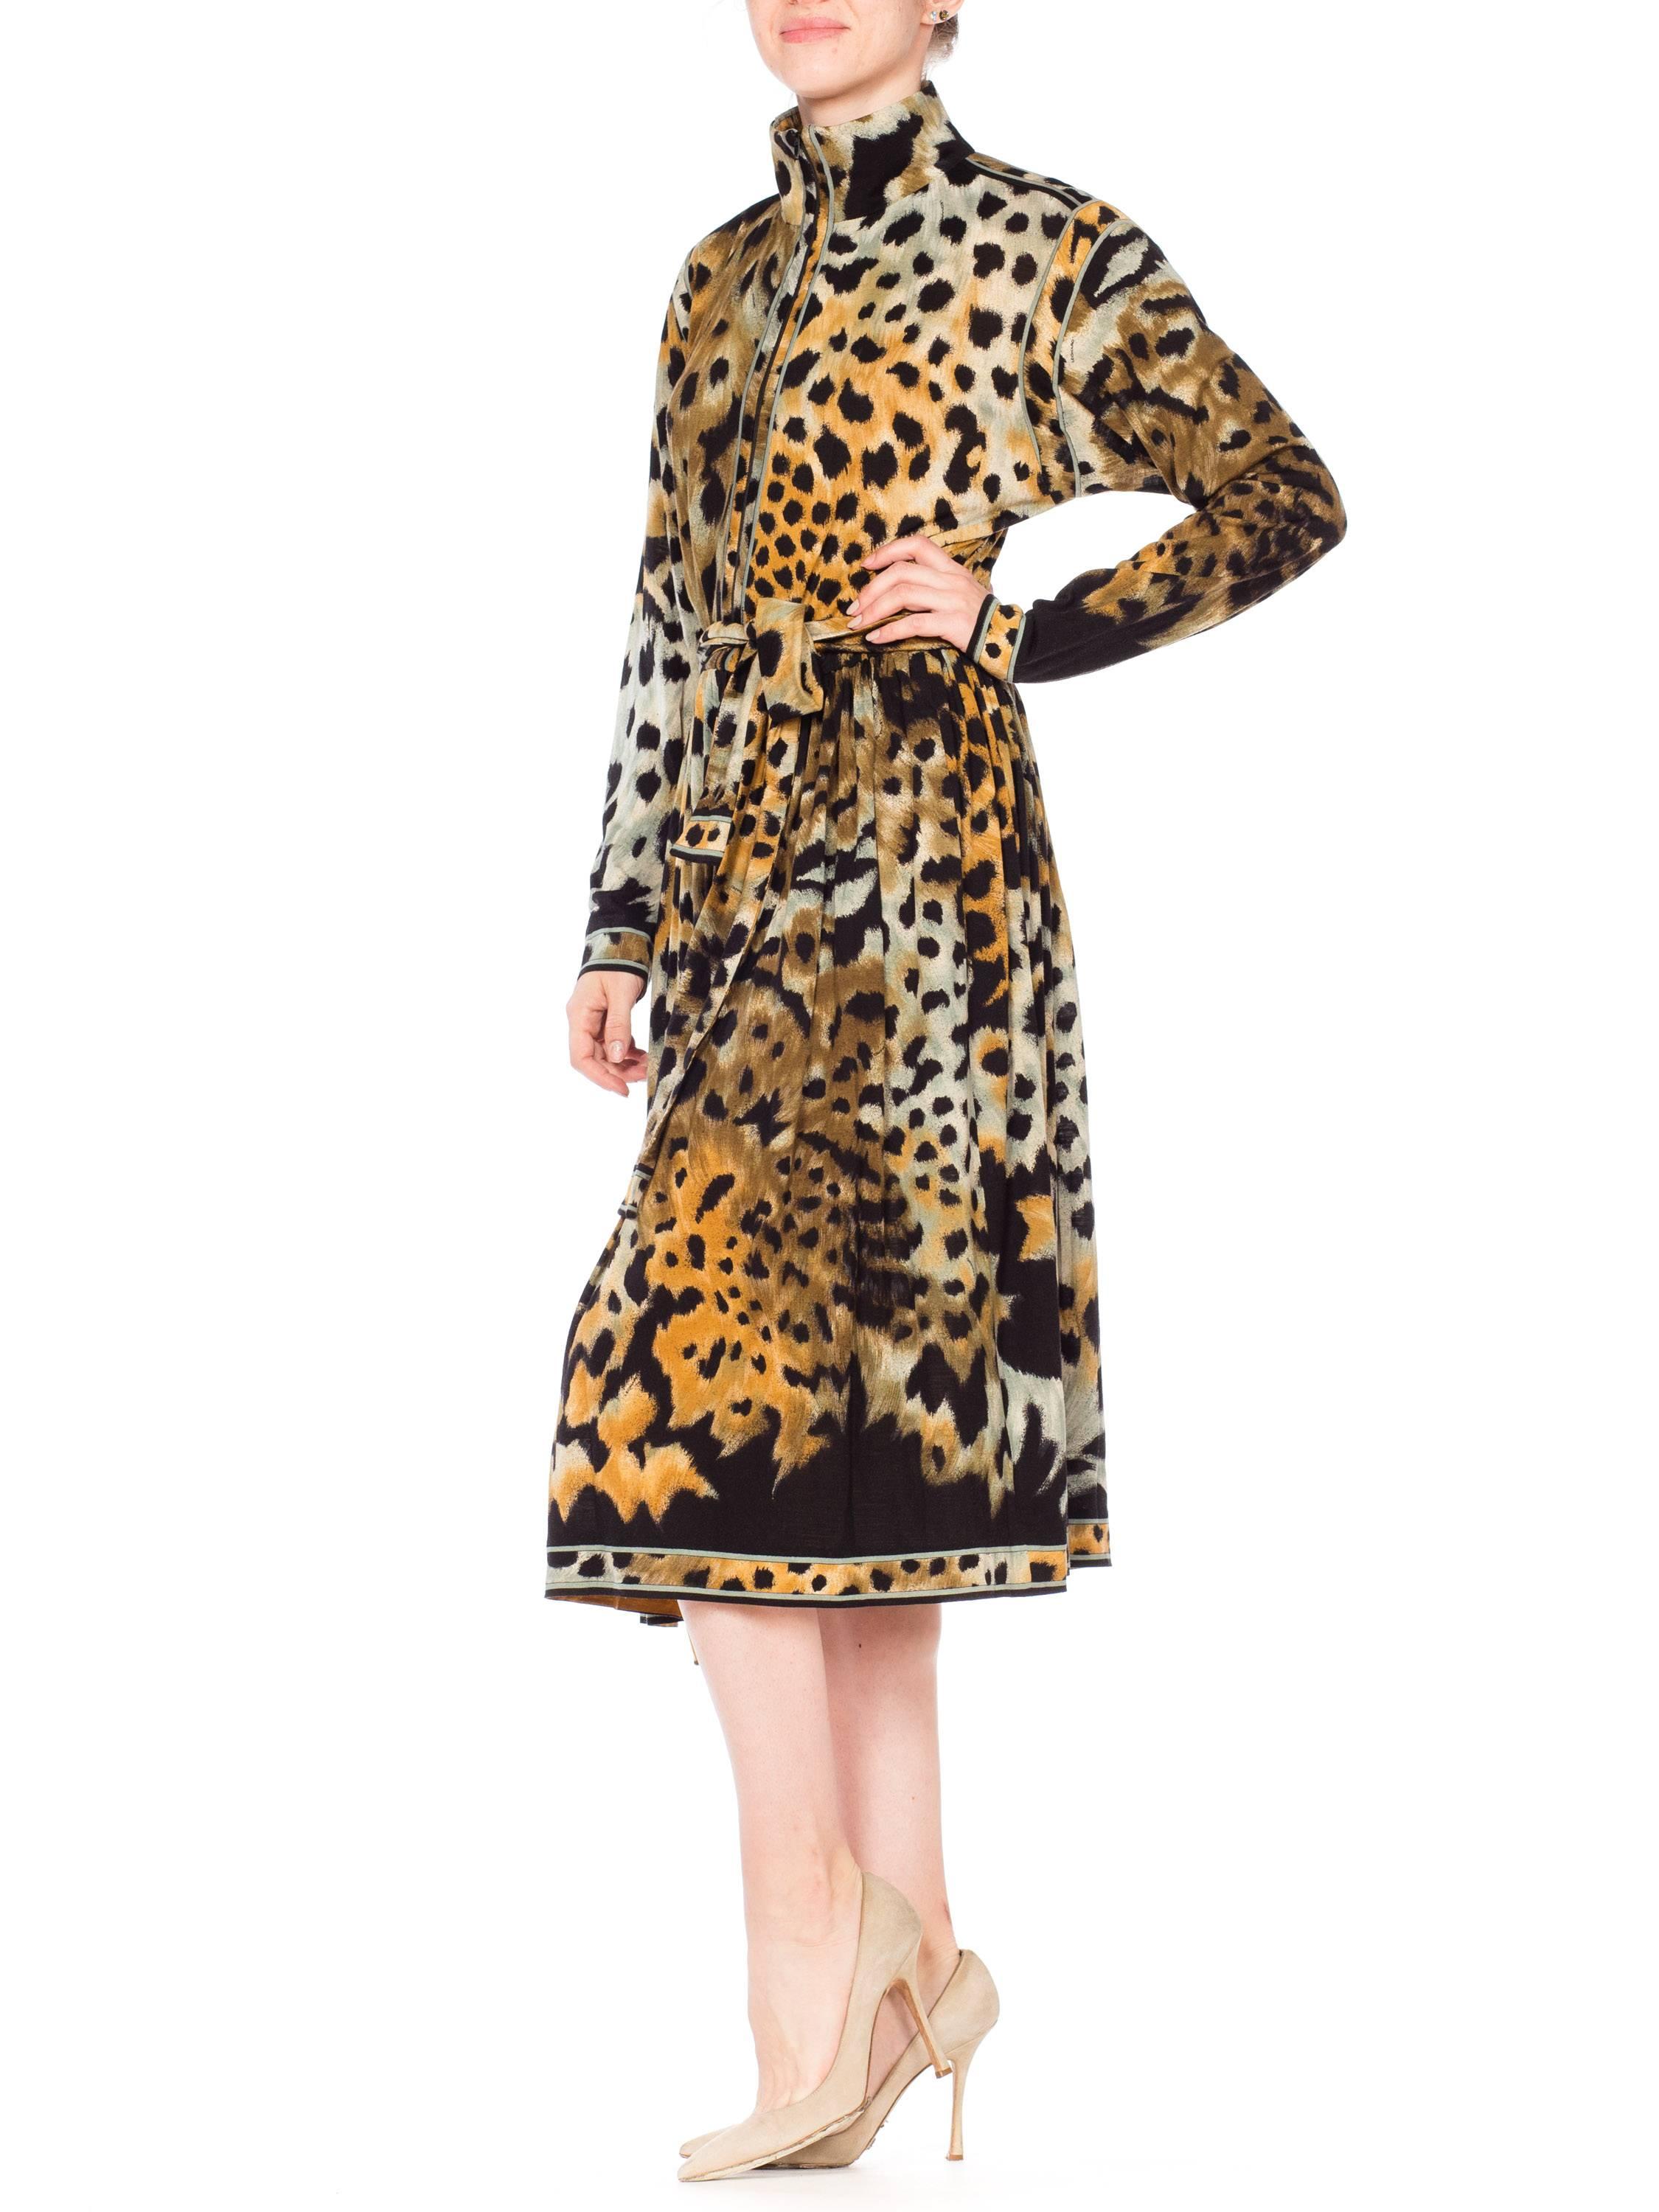 Leopard Print Leonard French Jersey Dress 4